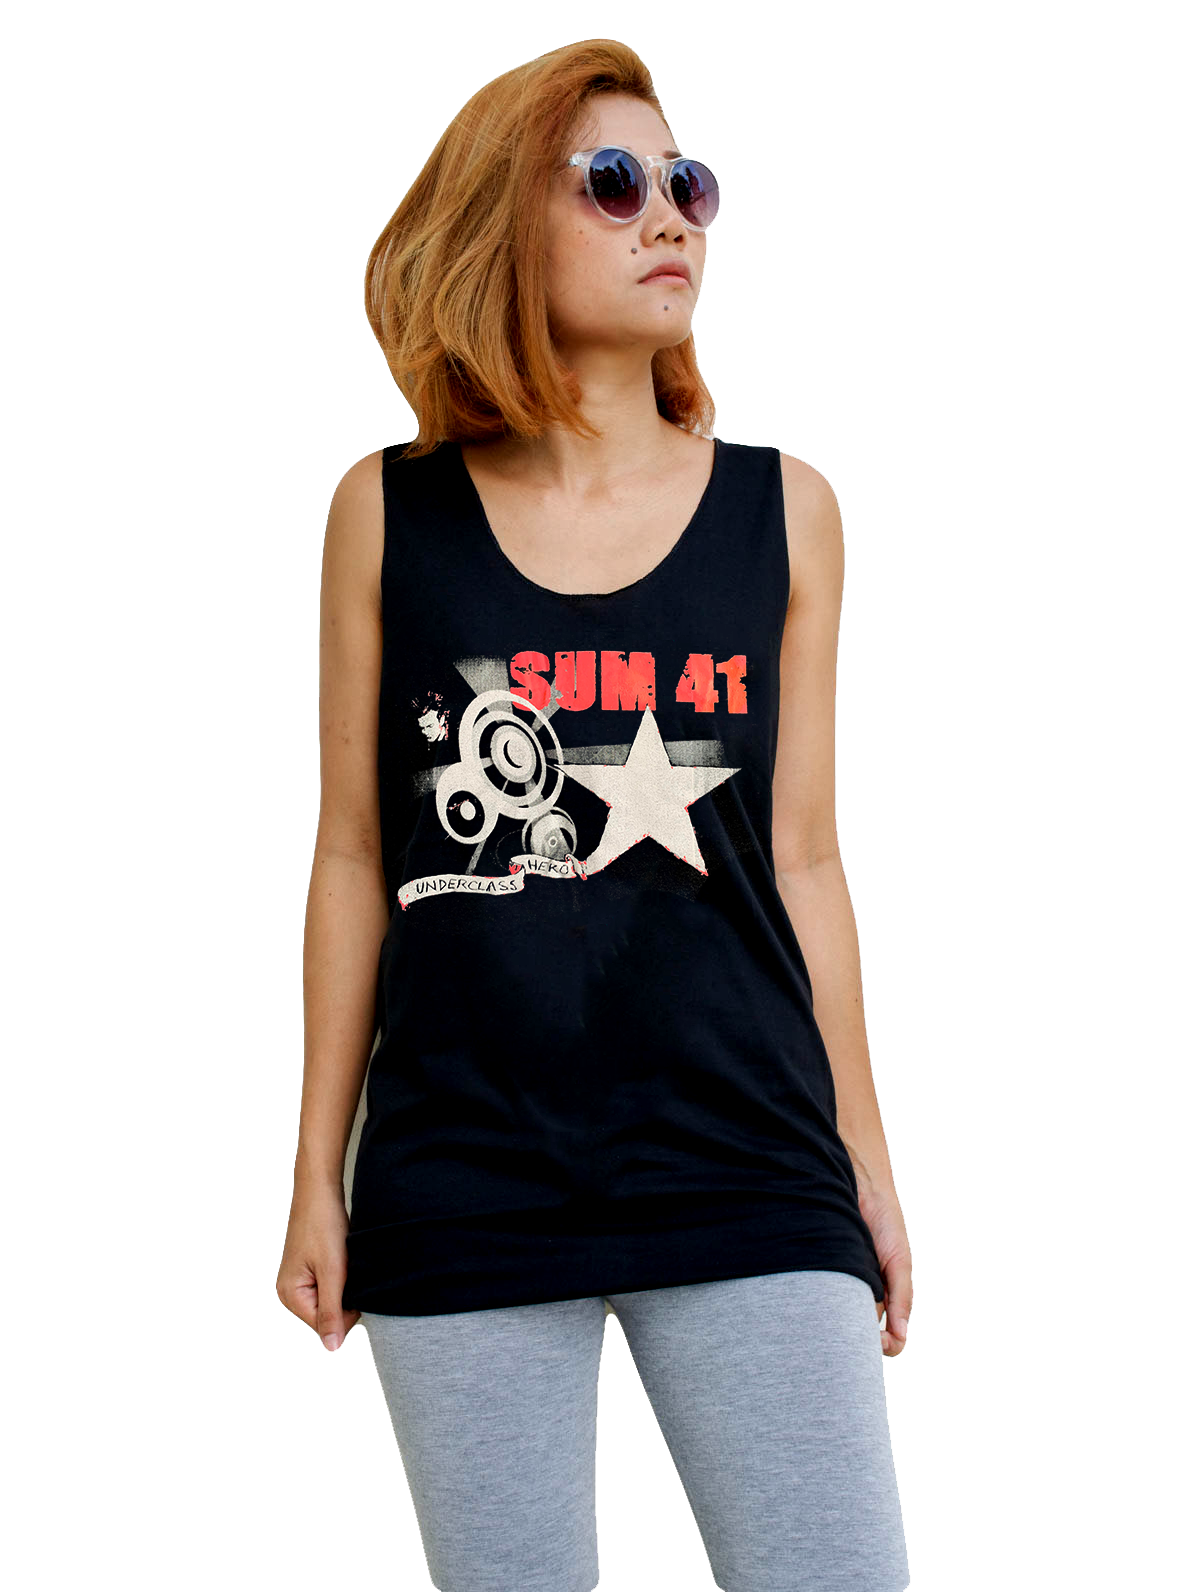 Unisex Sum 41 Tank-Top Singlet vest Sleeveless T-shirt